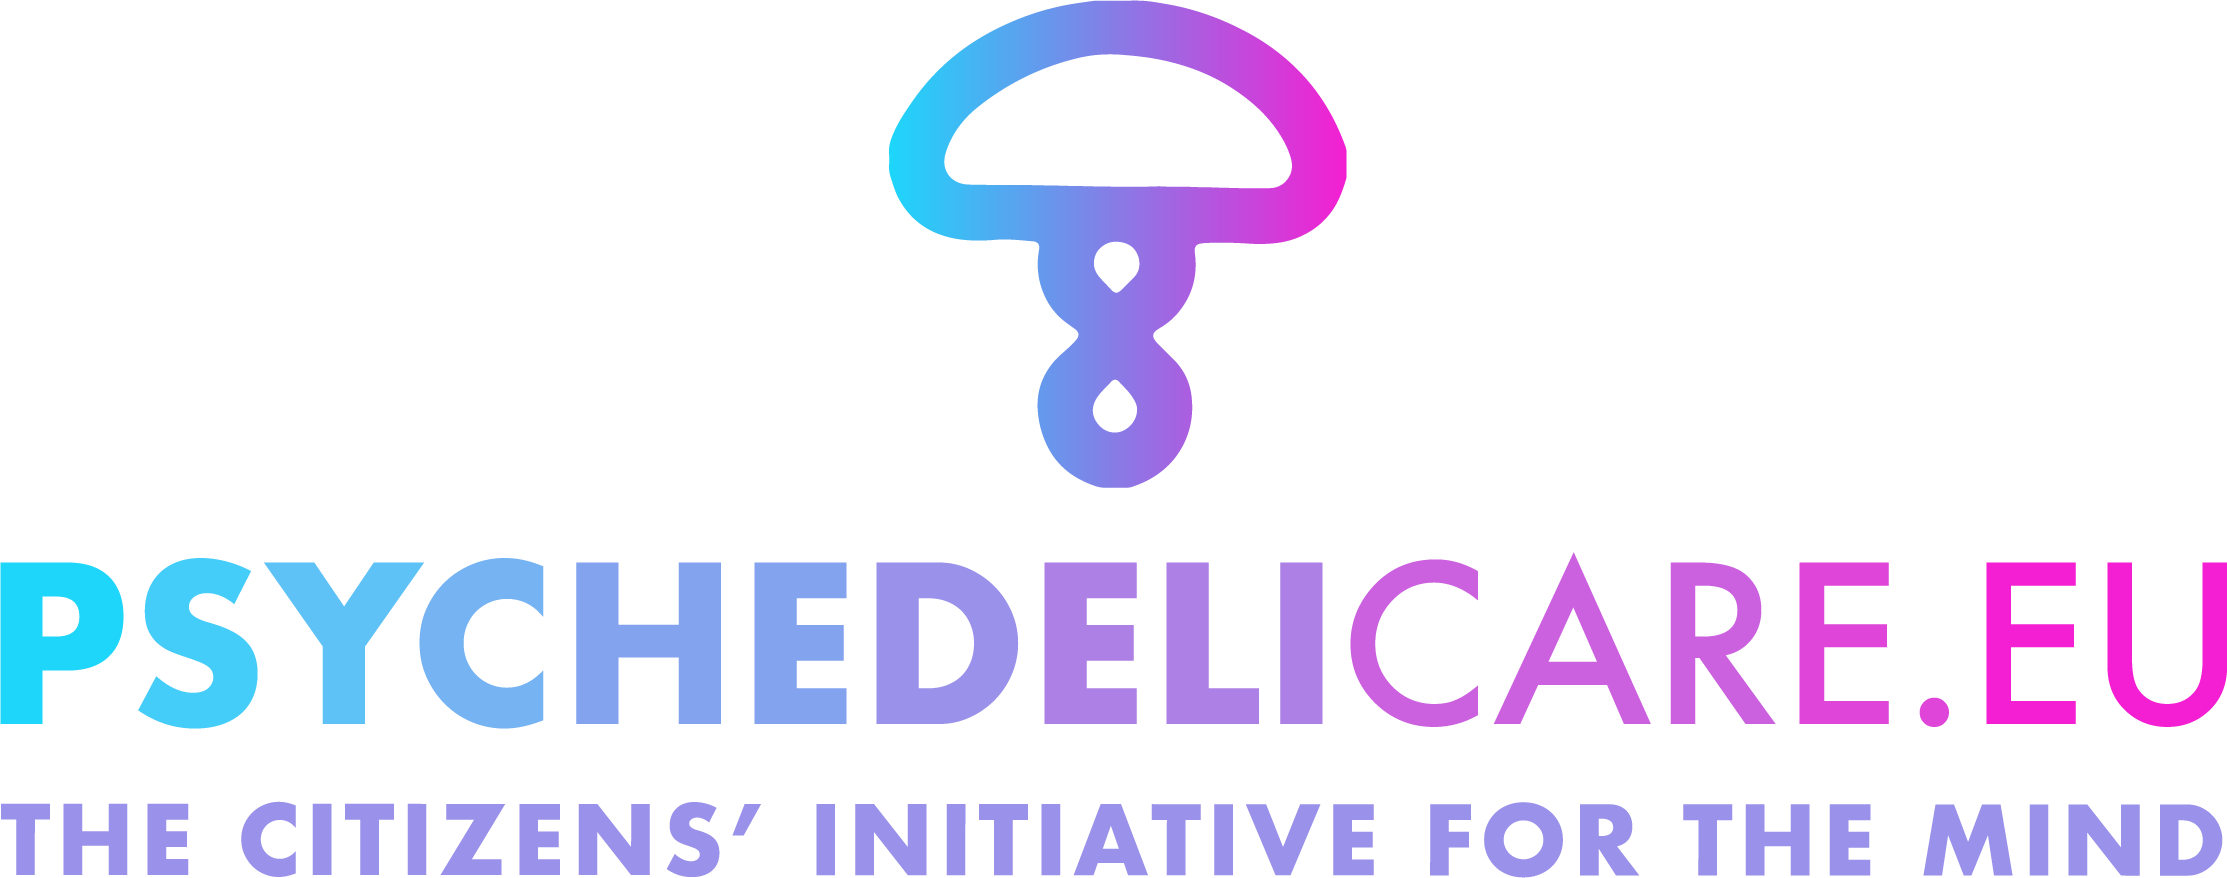 Psychedelicare Initiative Logo